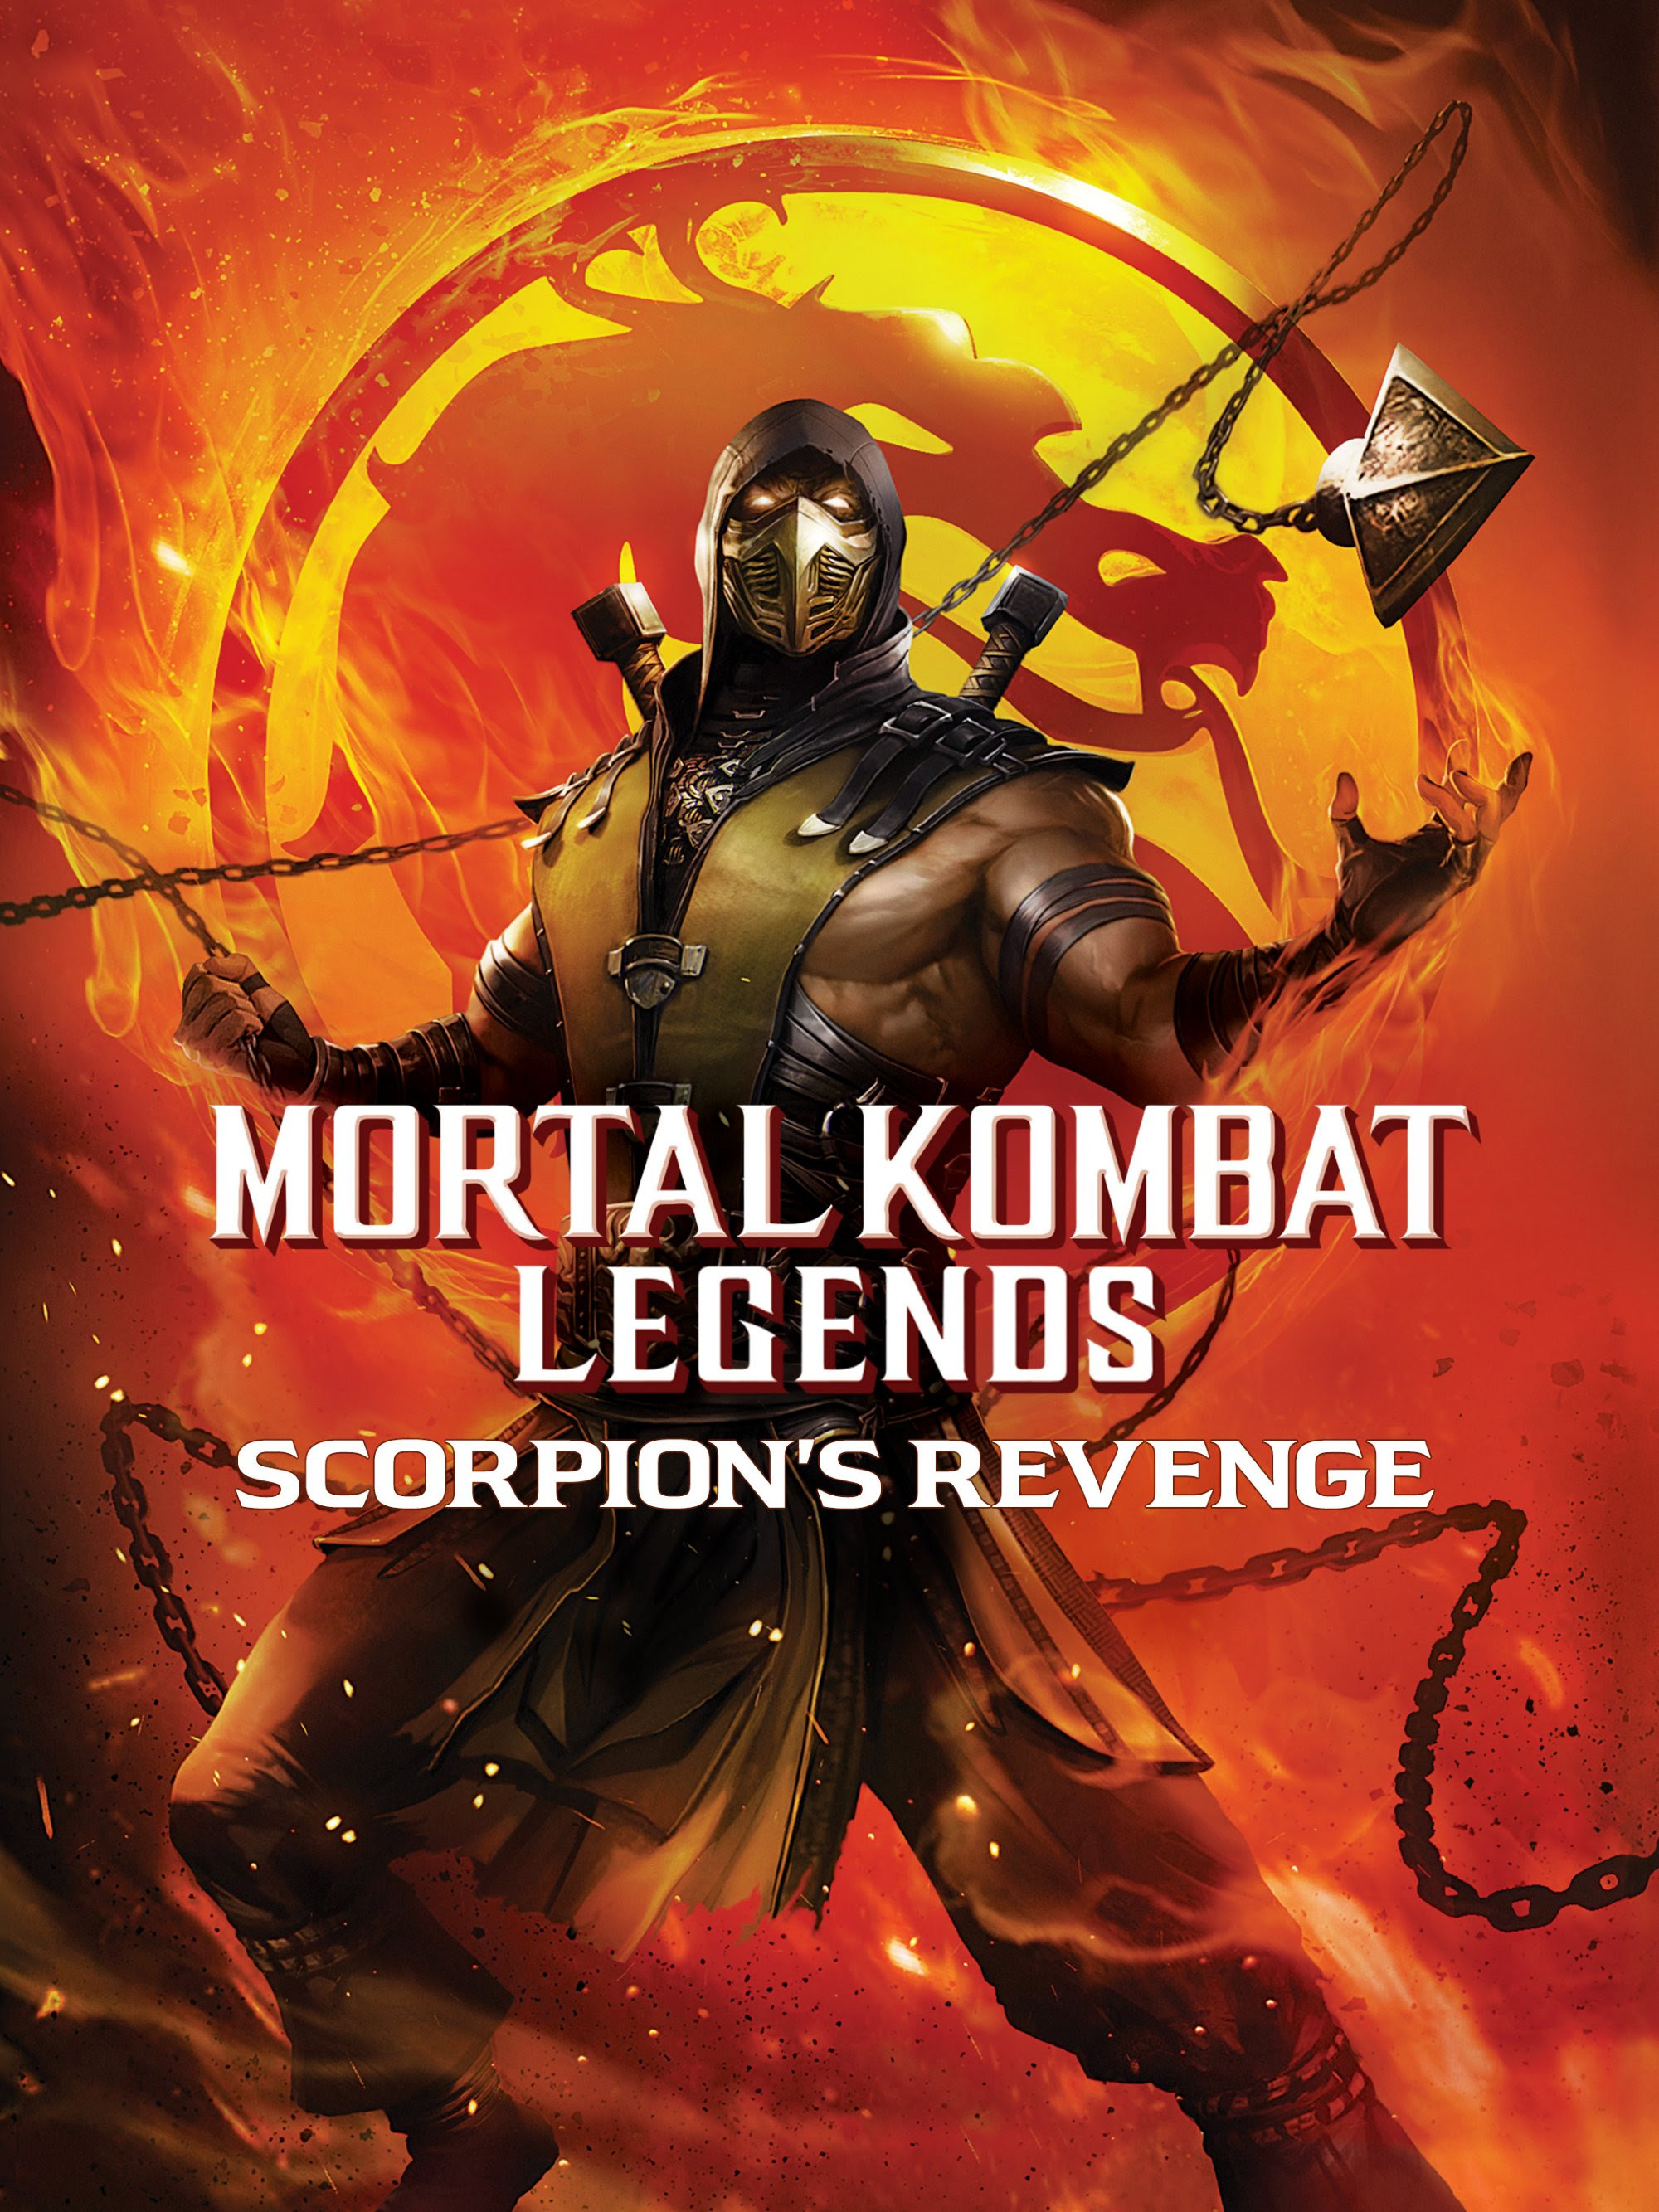 Mortal Kombat Legends: Scorpion Revenge review